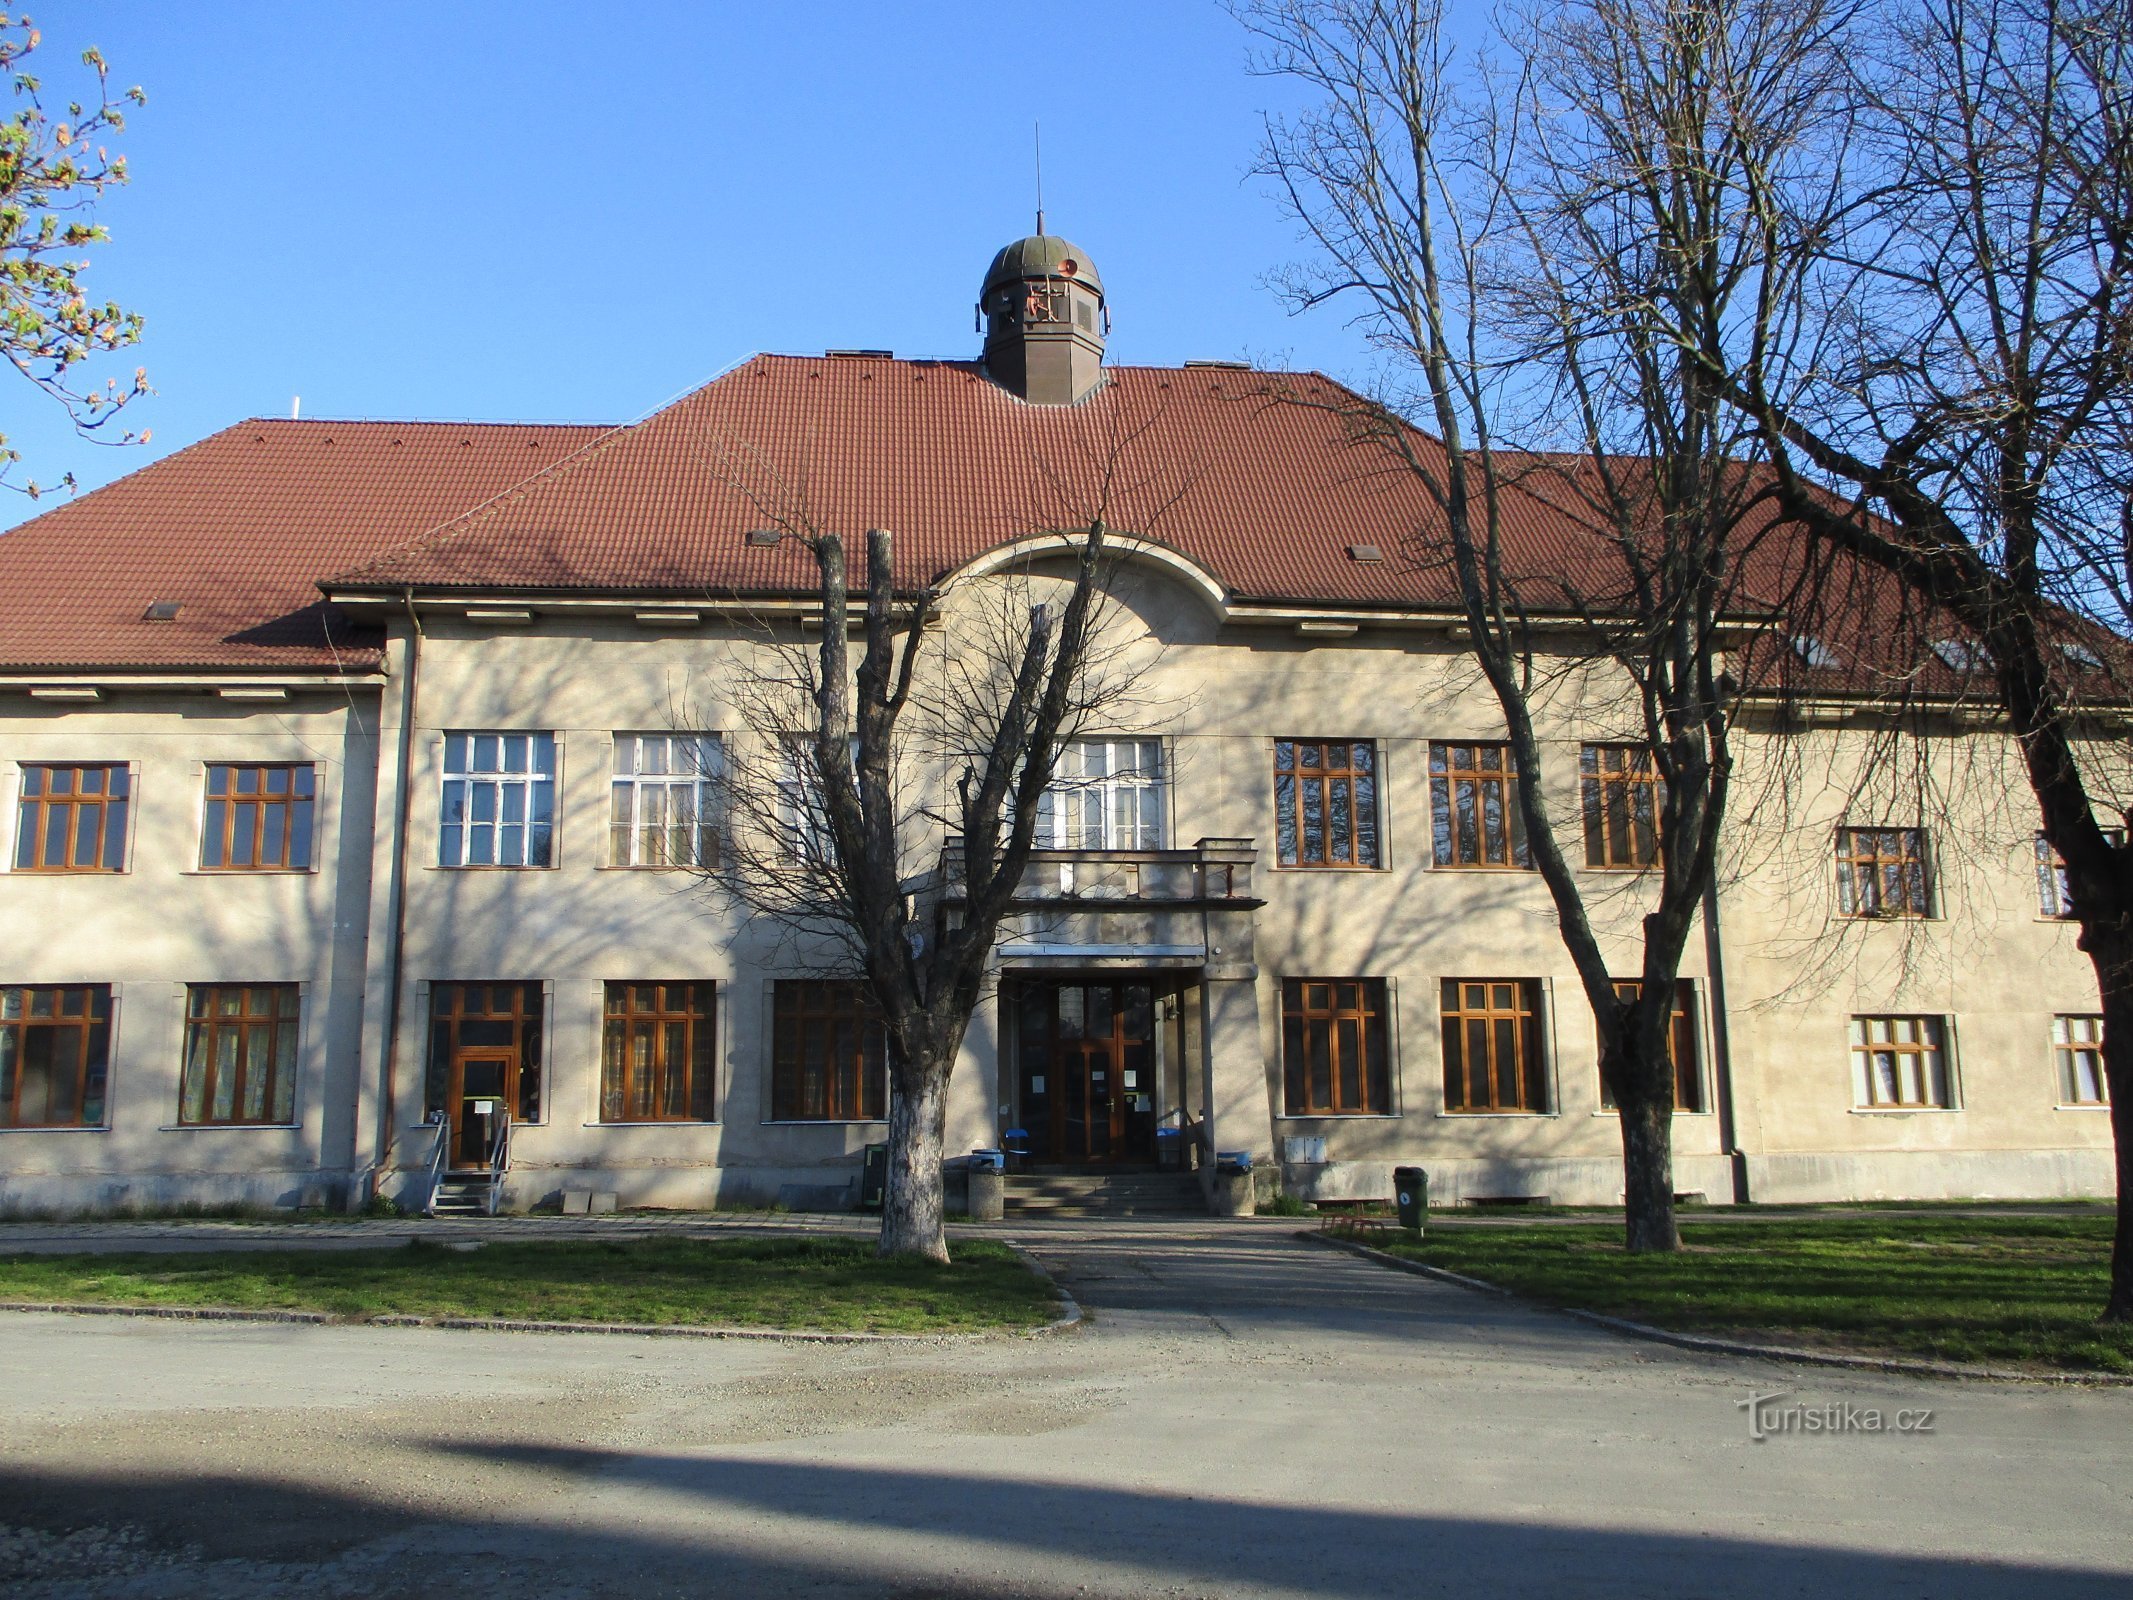 Hradecká số 151 (cựu trường giáo dục nam sinh, Opatovice nad Labem, 12.4.2020/XNUMX/XNUMX)